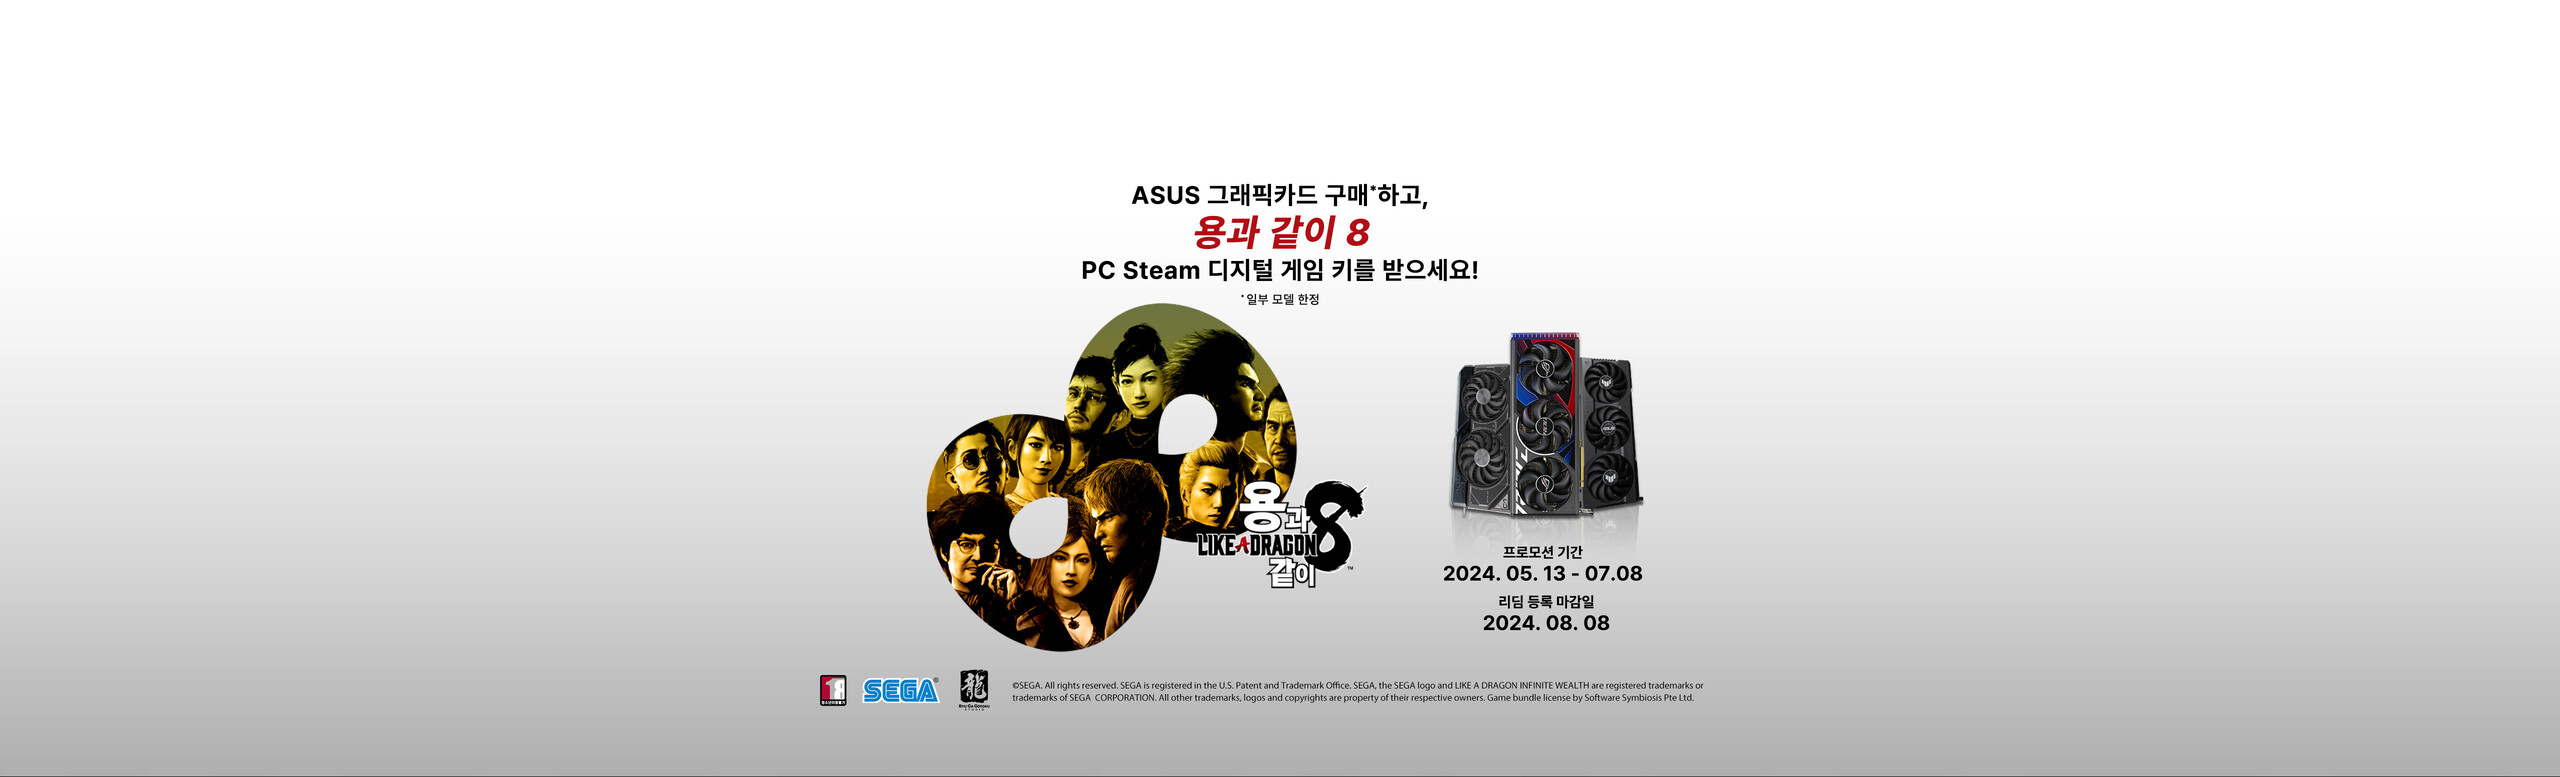 ASUS 그래픽카드 구매하고 용과 같이 8 PC Stream 디지털 게임 키를 받으세요!